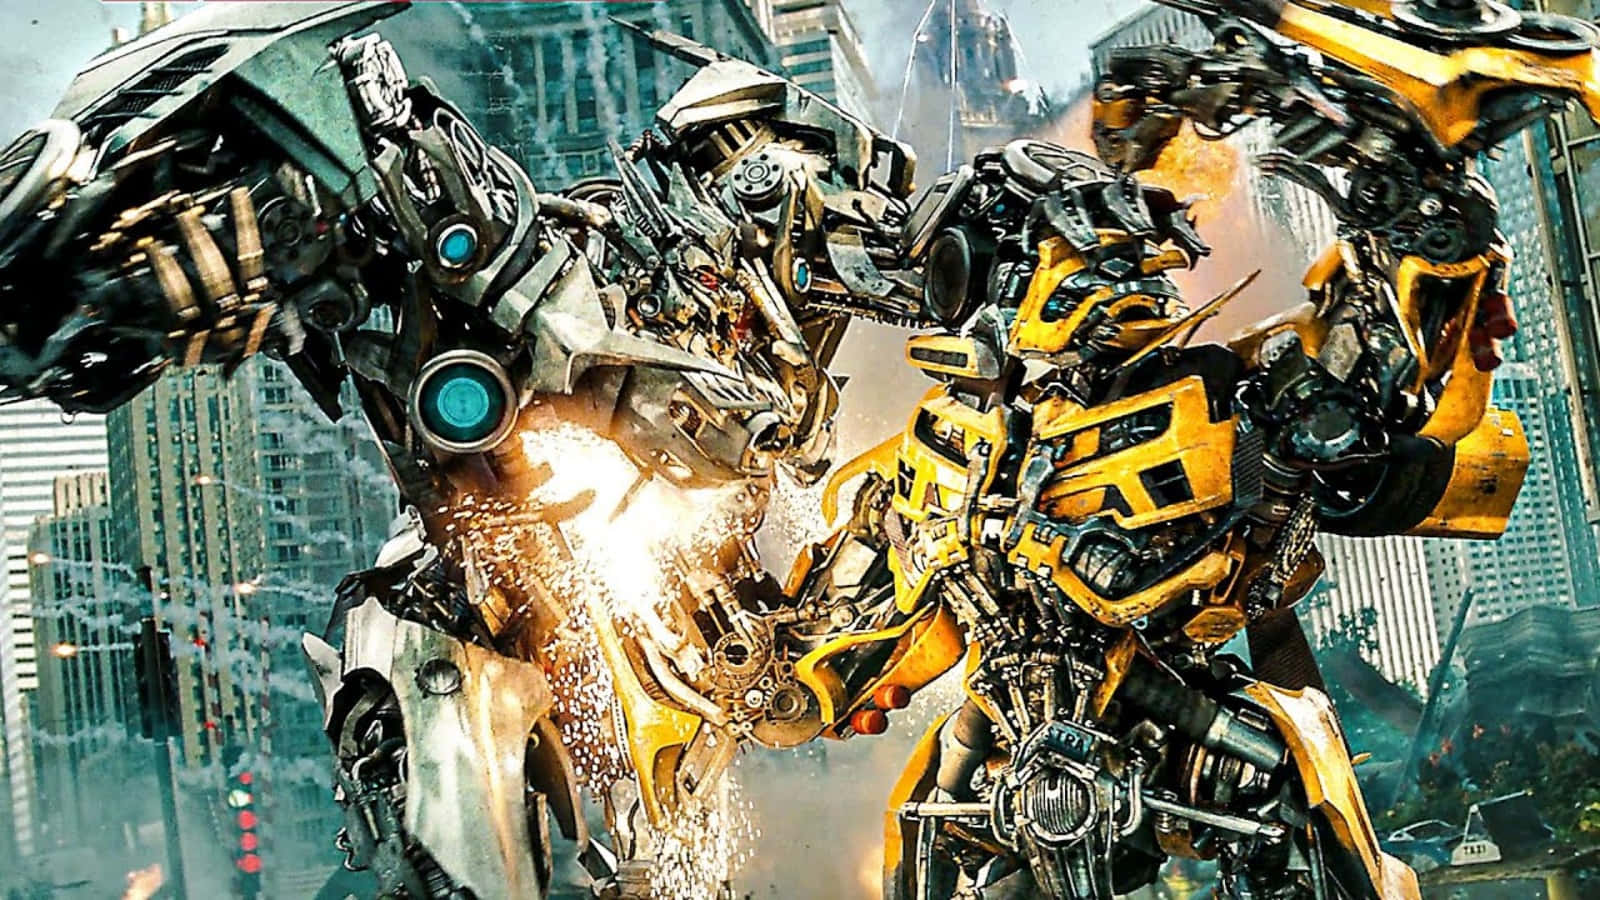 Transformersder Letzte Ritter Filmplakat